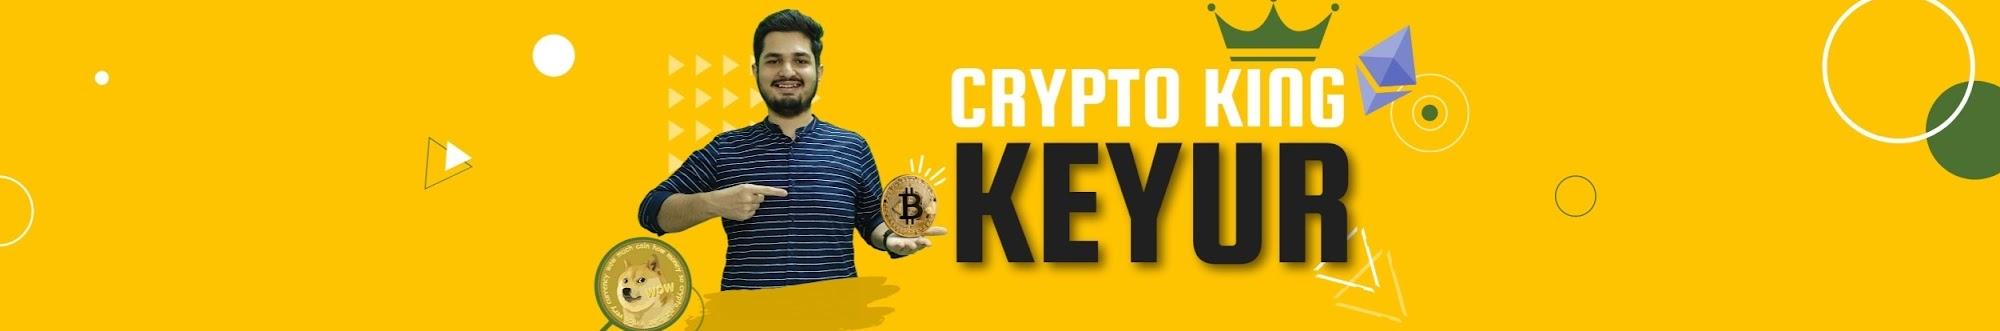 Crypto King Keyur